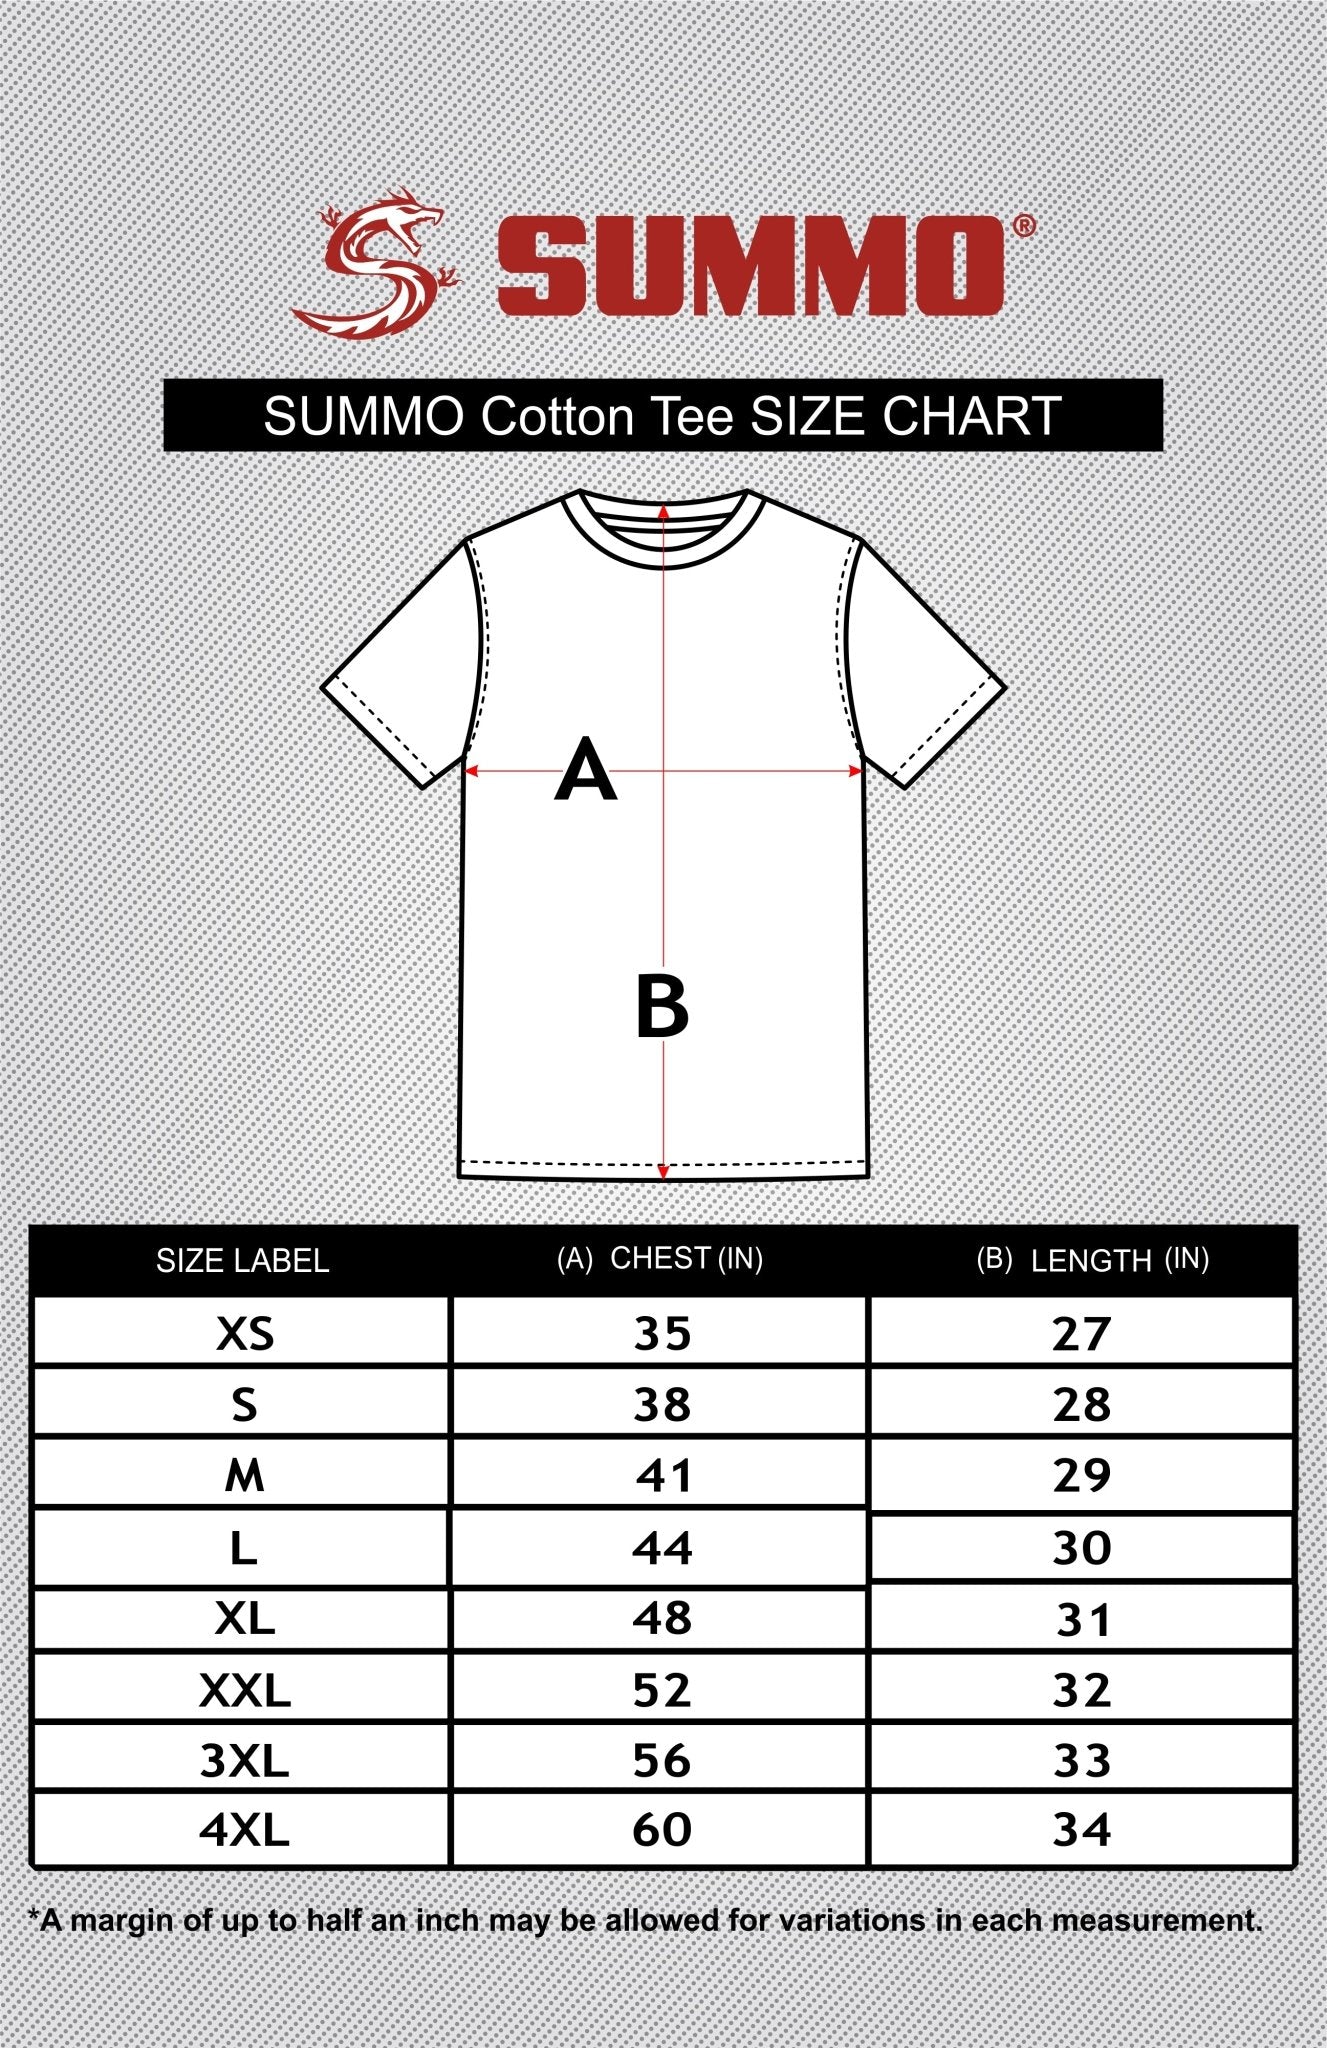 Chokemon Combat Cotton Tee for Men/Women - Summo Sports